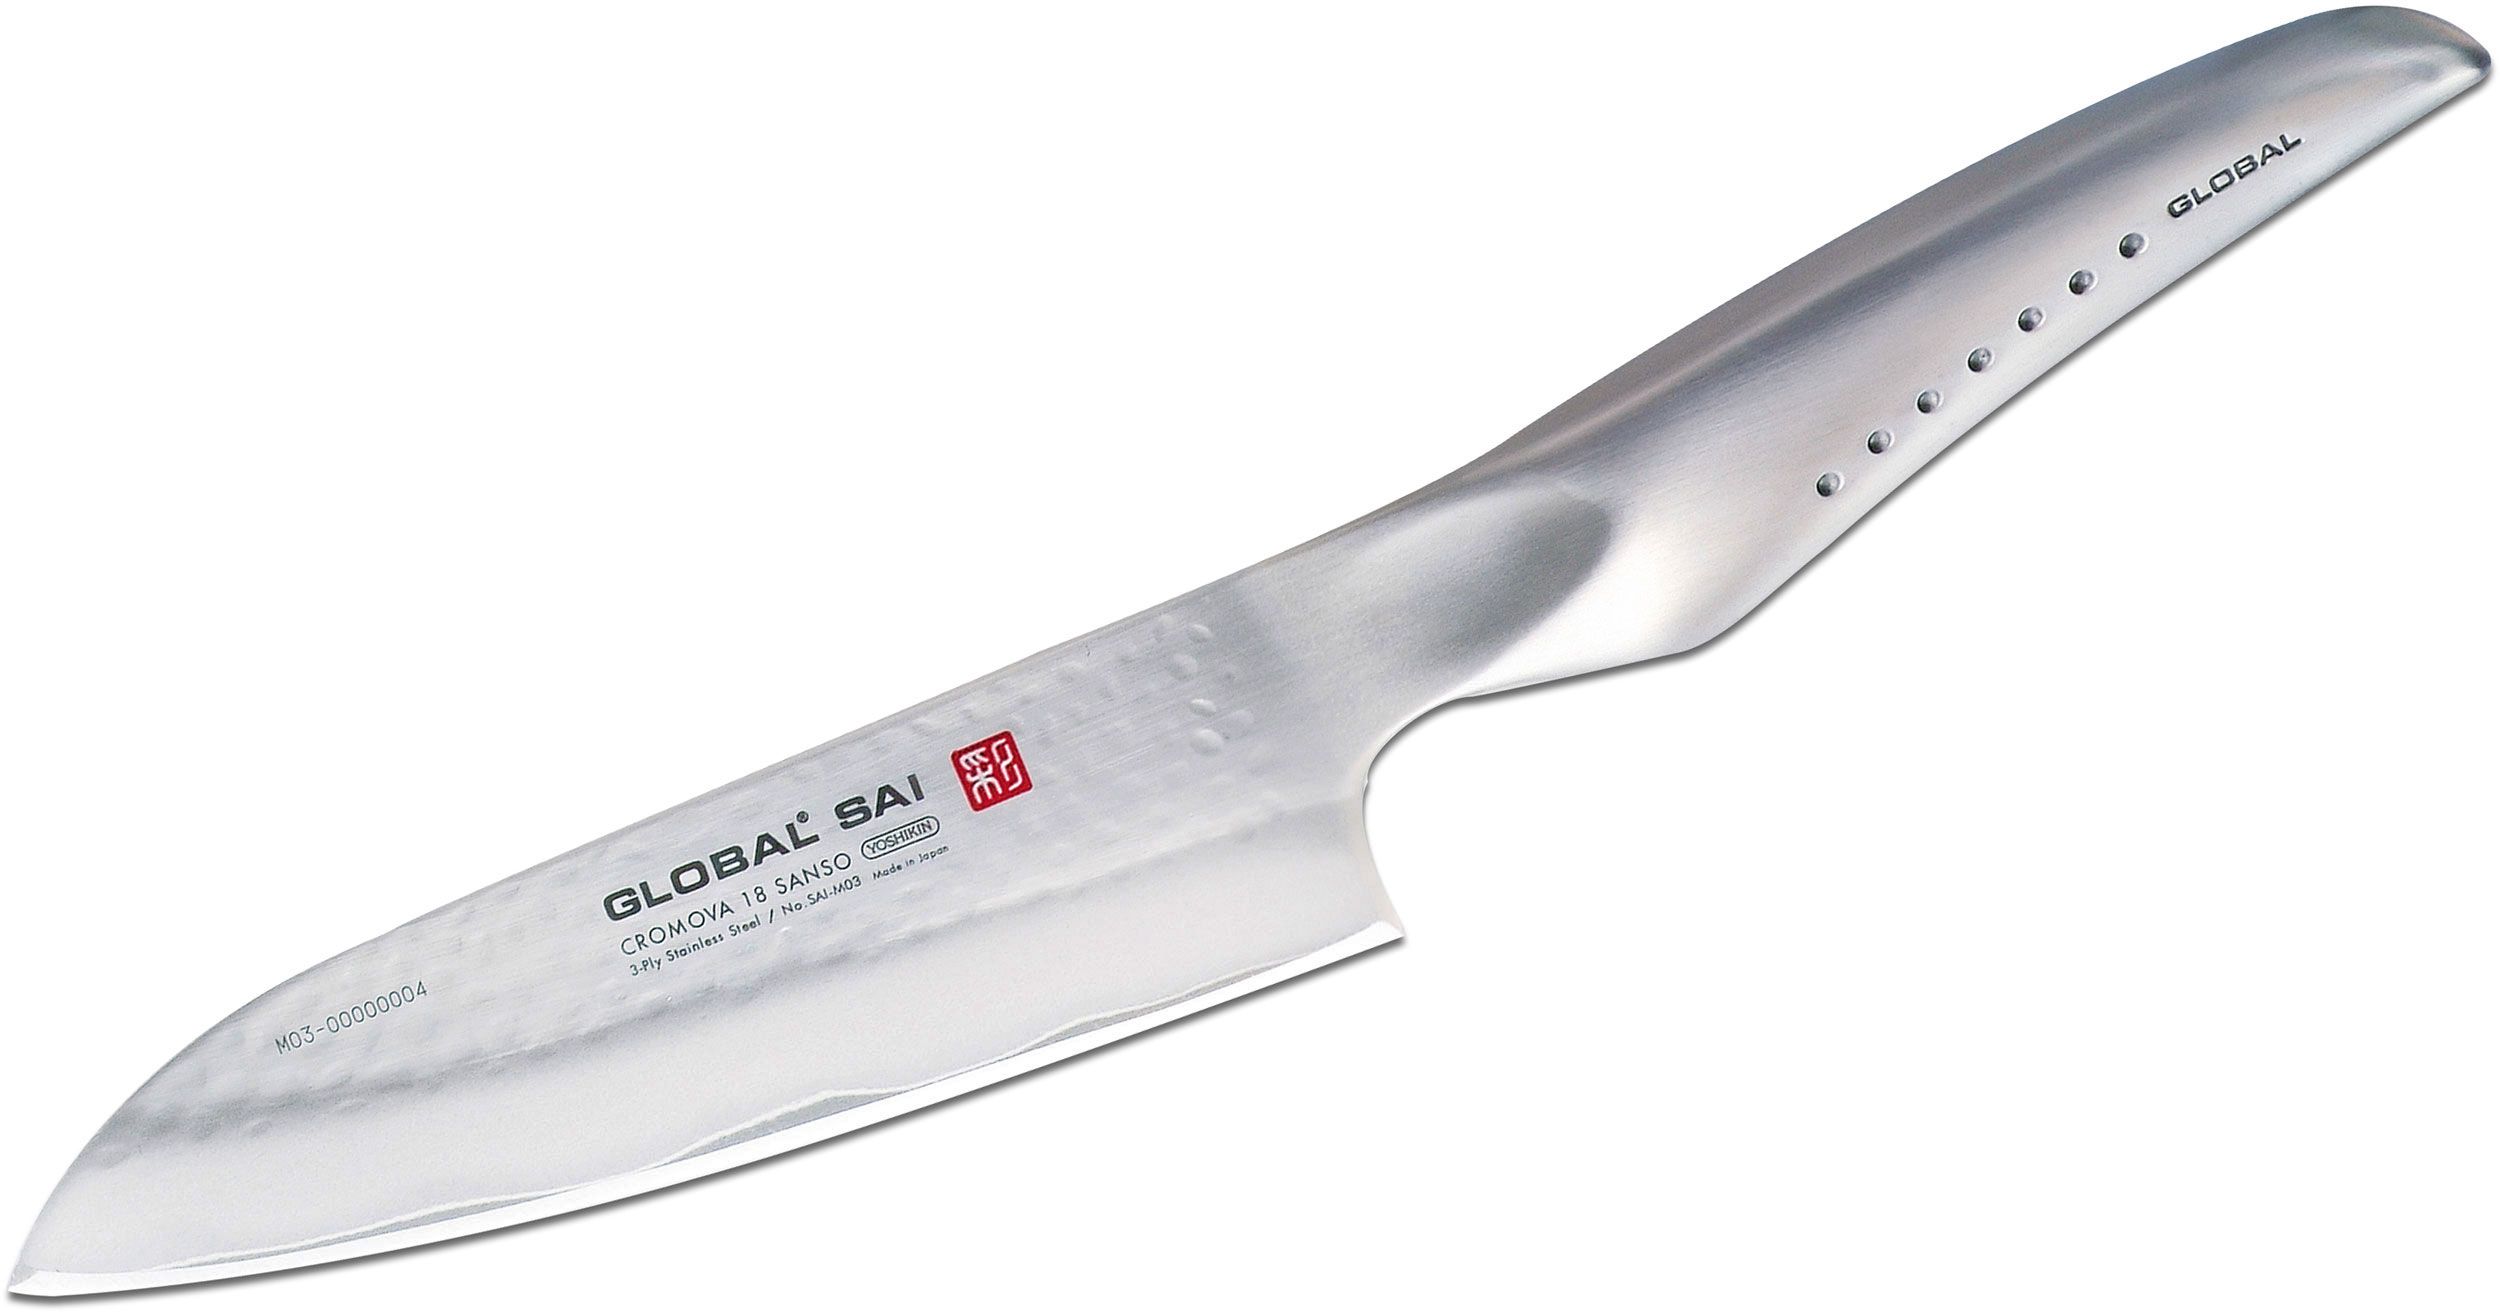 Global SAI-02 Sai Chef's / Carving Knife 8 Hammered Blade